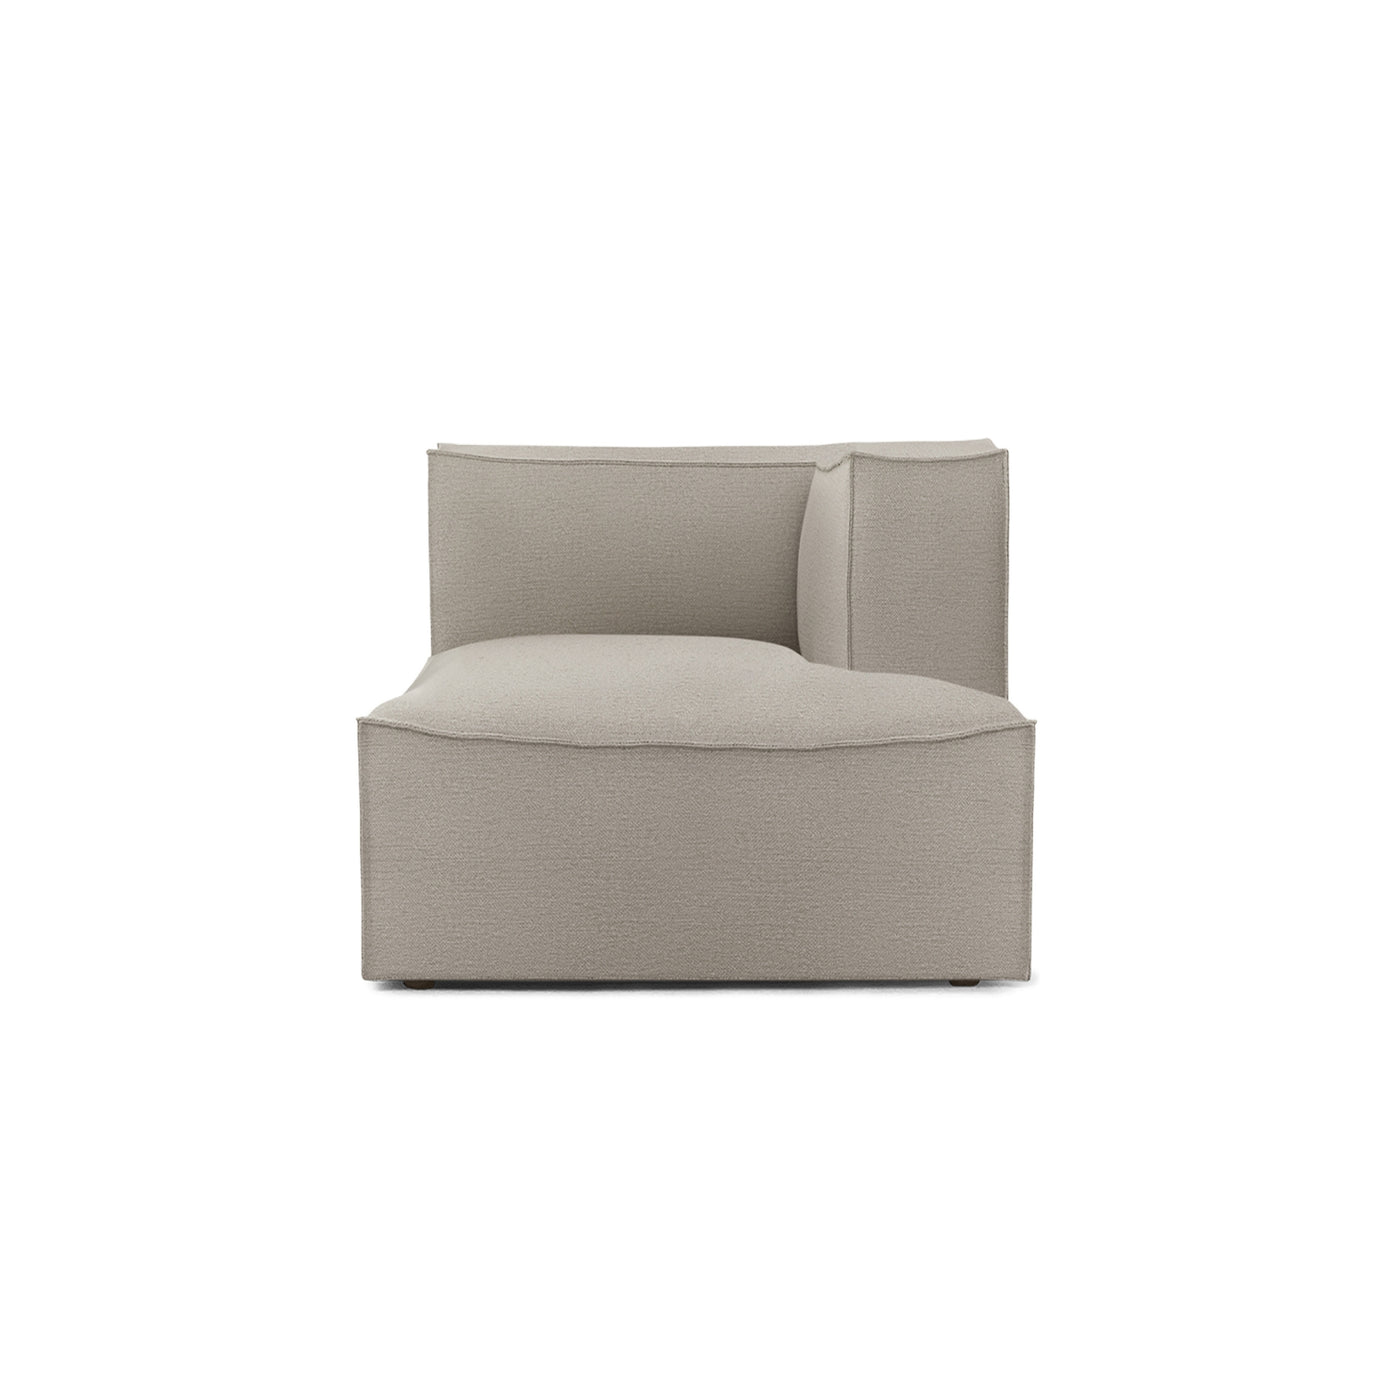 ferm LIVING Catena modular sofa in cotton linen. Made to order from someday designs. #colour_cotton-linen